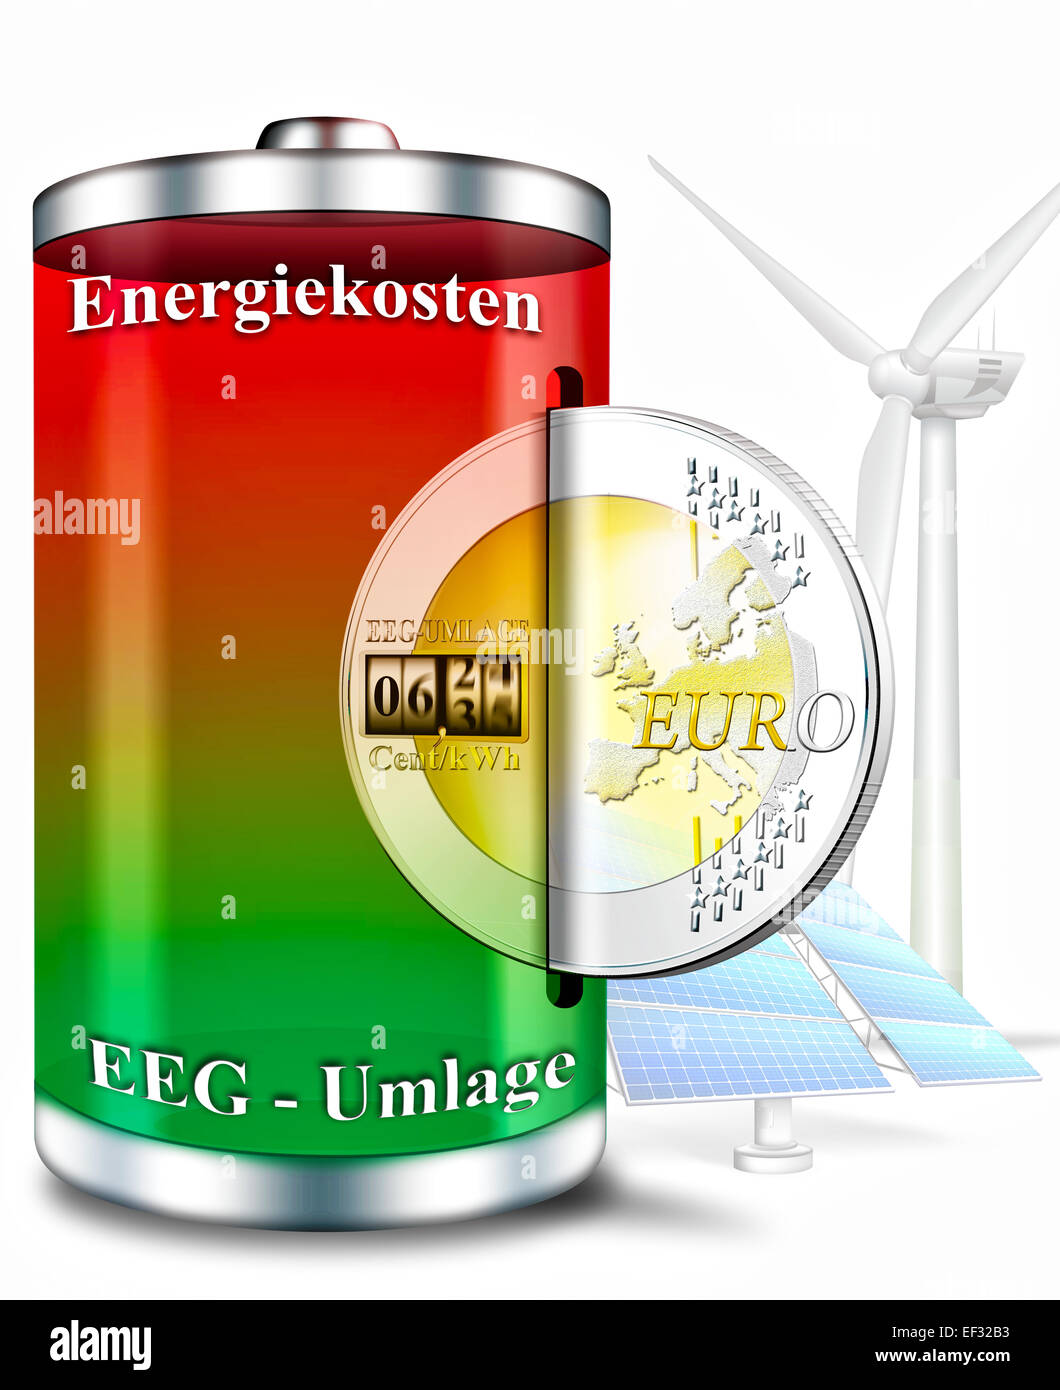 Akku, Batterie, mit Beschriftung "Energiekosten, EEG-Umlage", Deutsch für "Energiekosten, EEG EEG-Umlage" Stockfoto